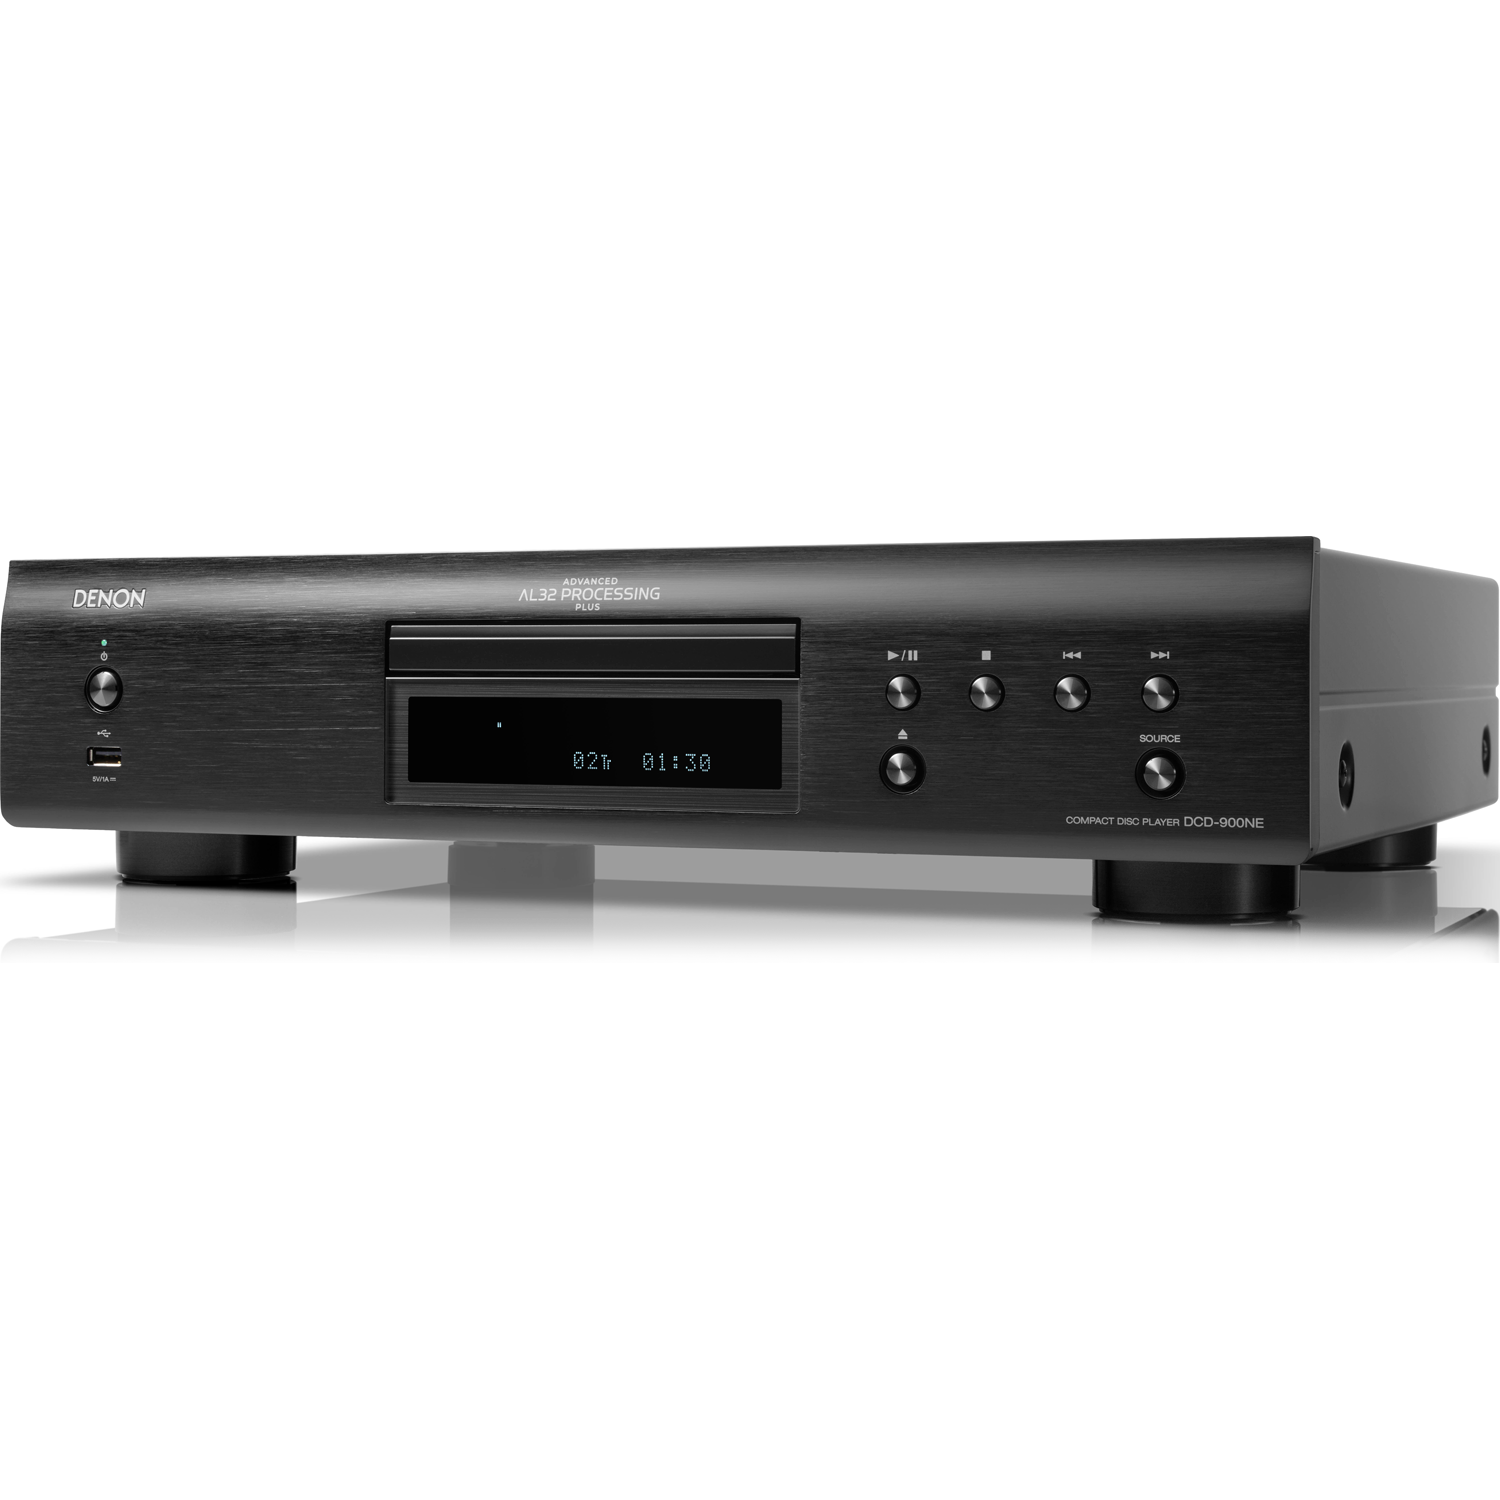 symmetri eskalere mikrofon DENON DCD-900NE CD Player with Advanced AL32 Processing Plus |  Accessories4less